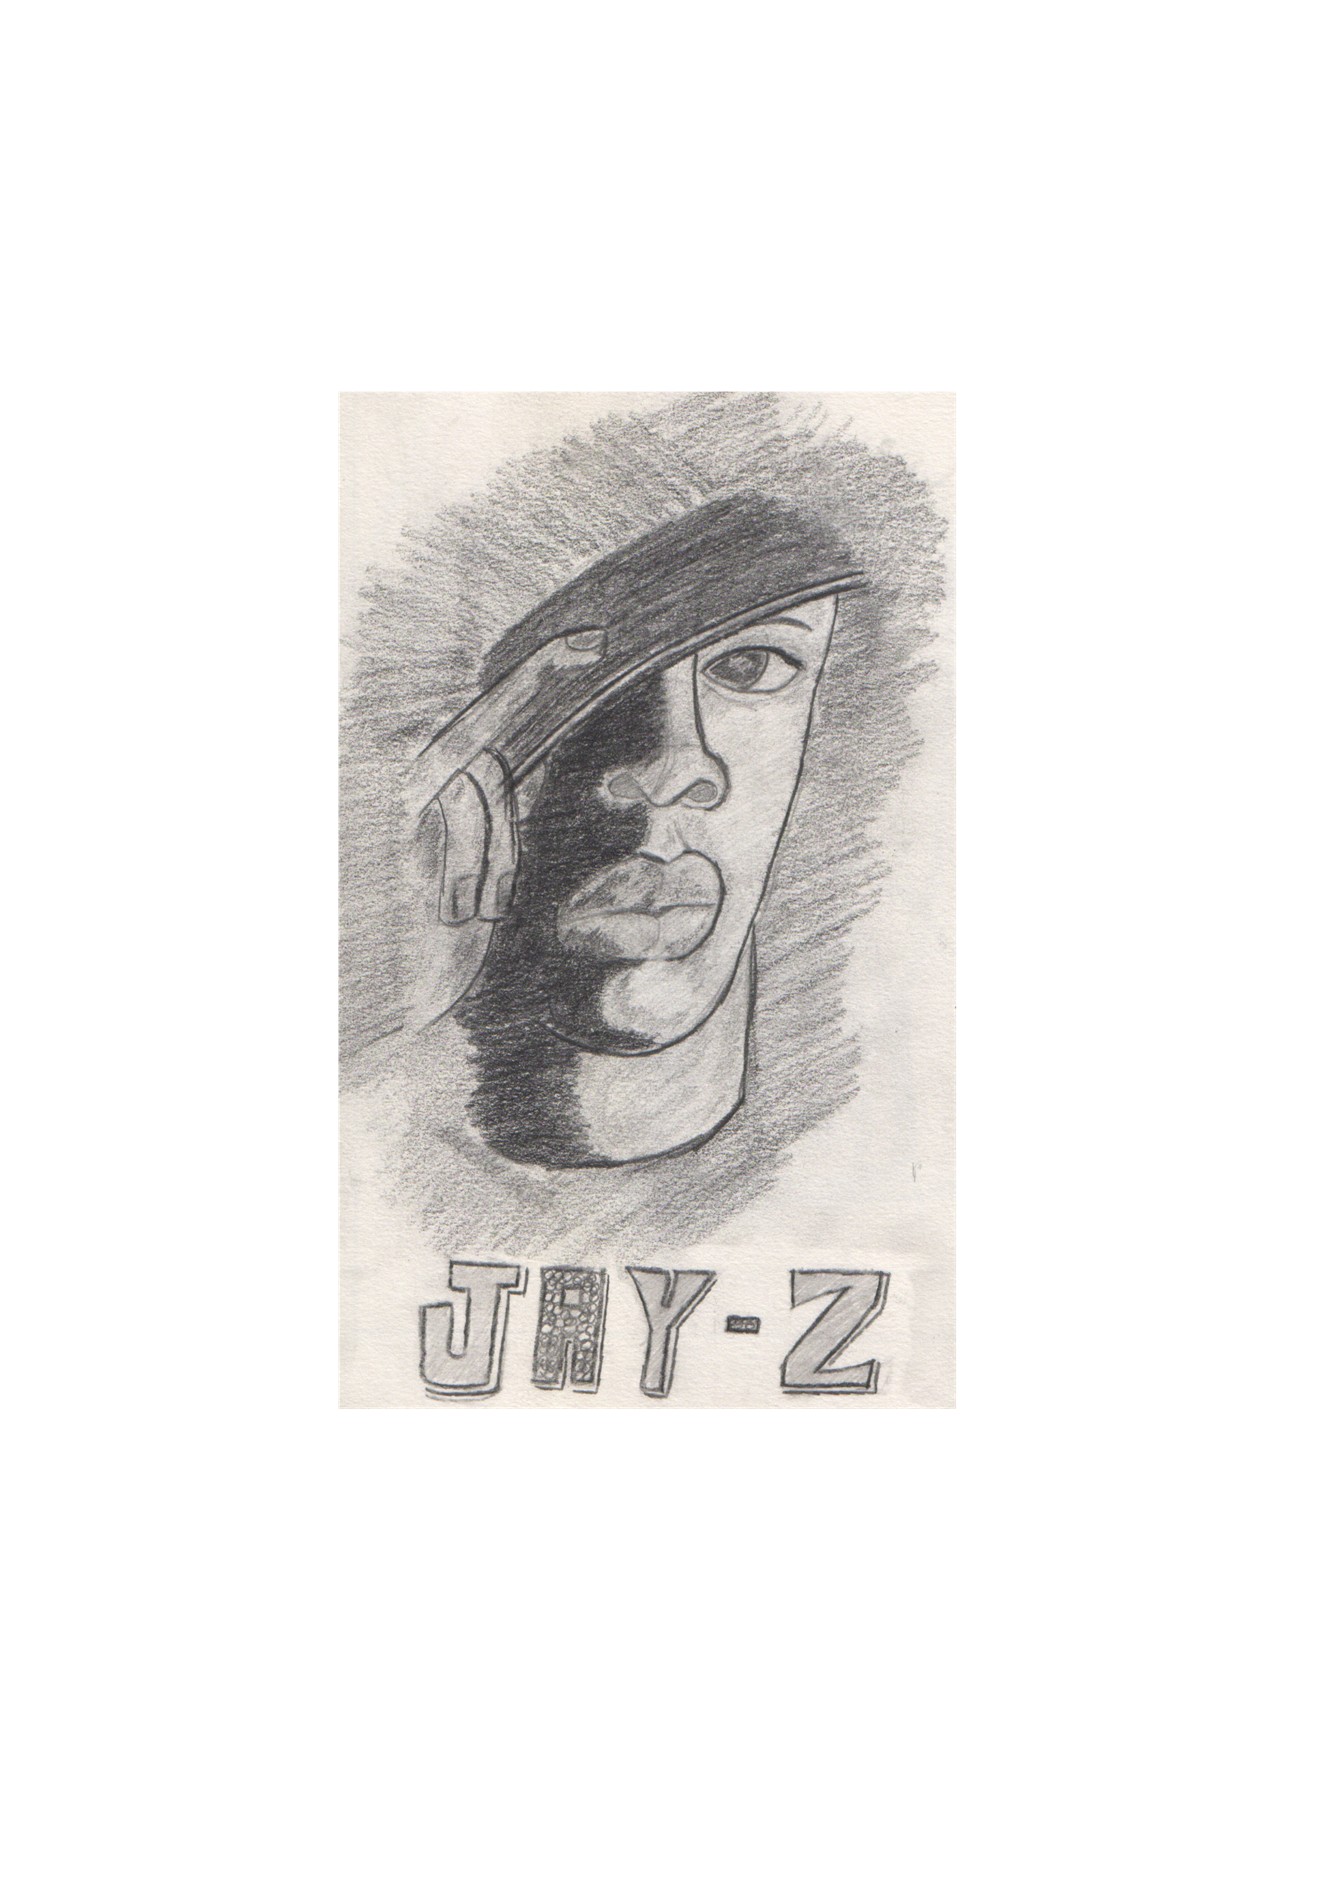 Jay-Z Sketch by KB